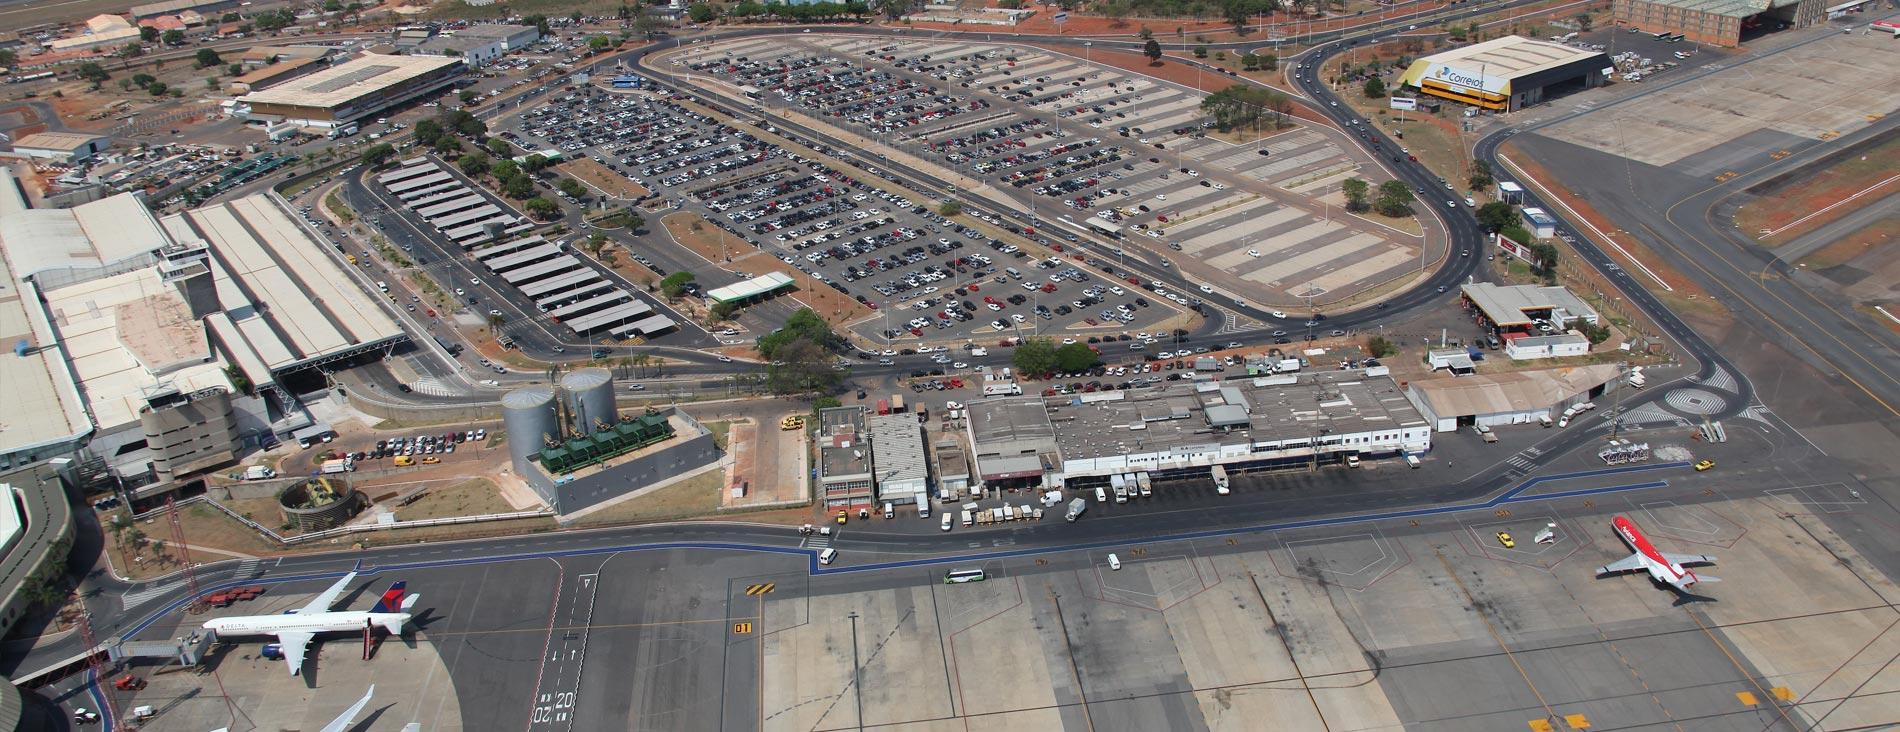 estacionamento-aeroporto-jk-brasilia-epc-construcoes